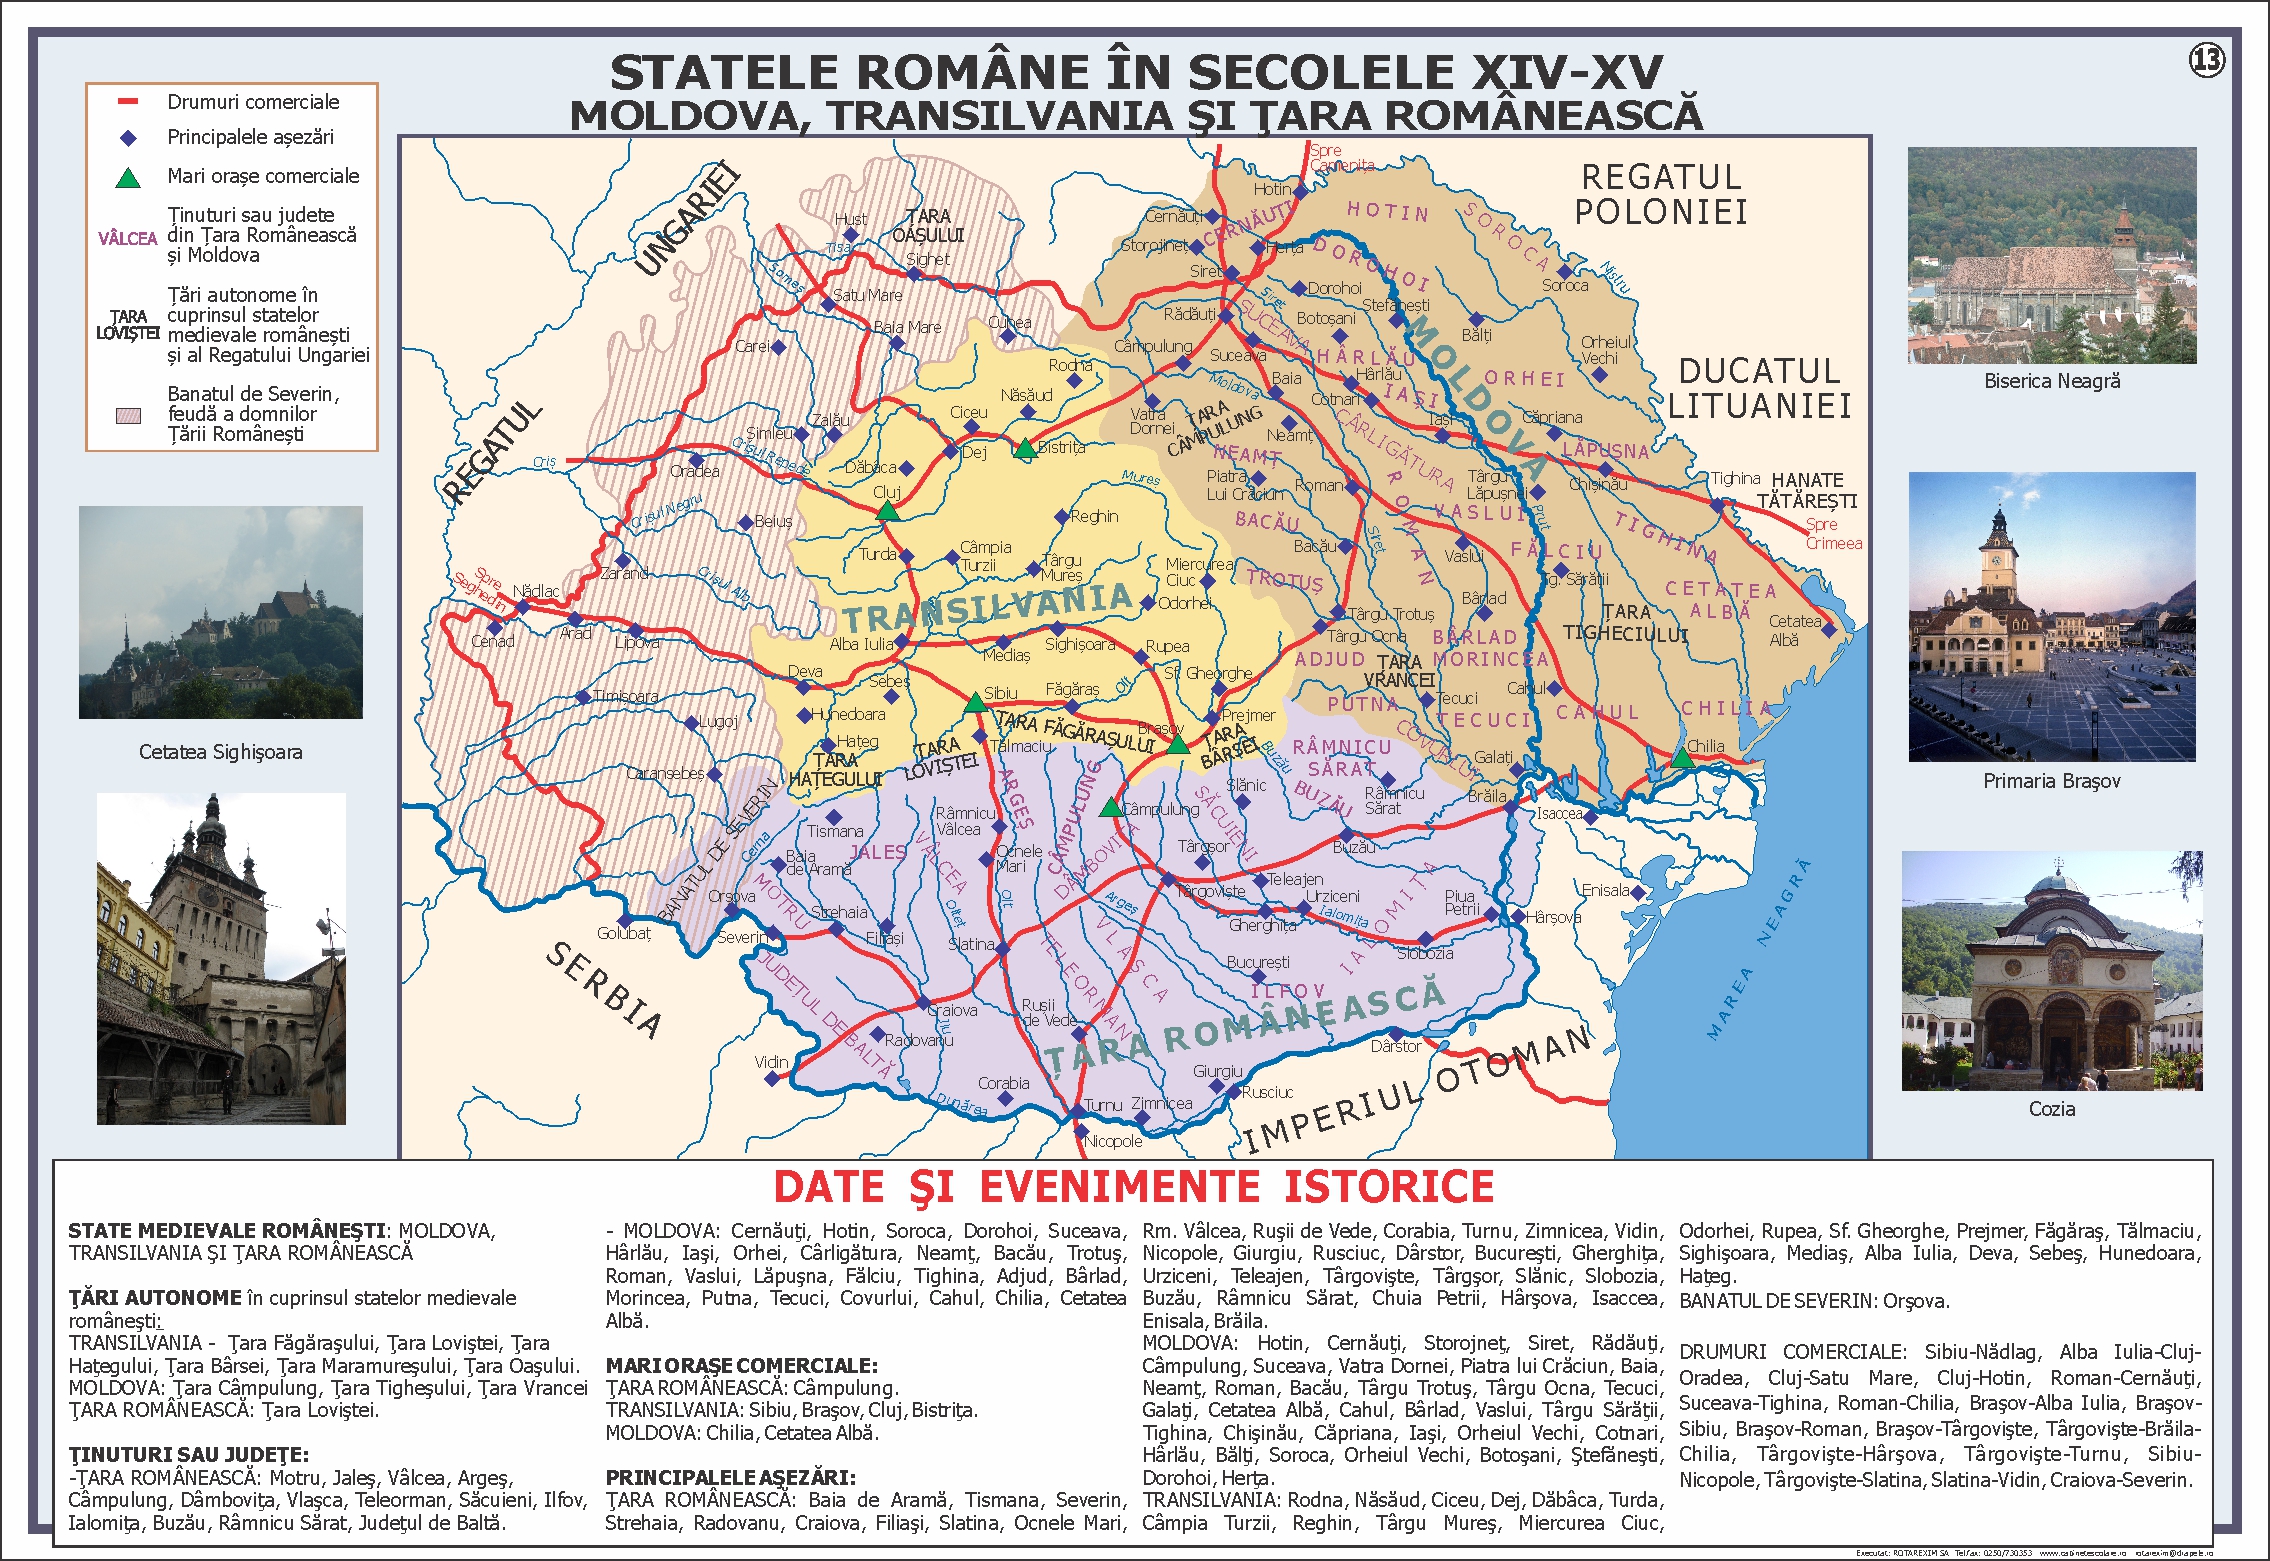 Statele Române în sec. XIV-XV